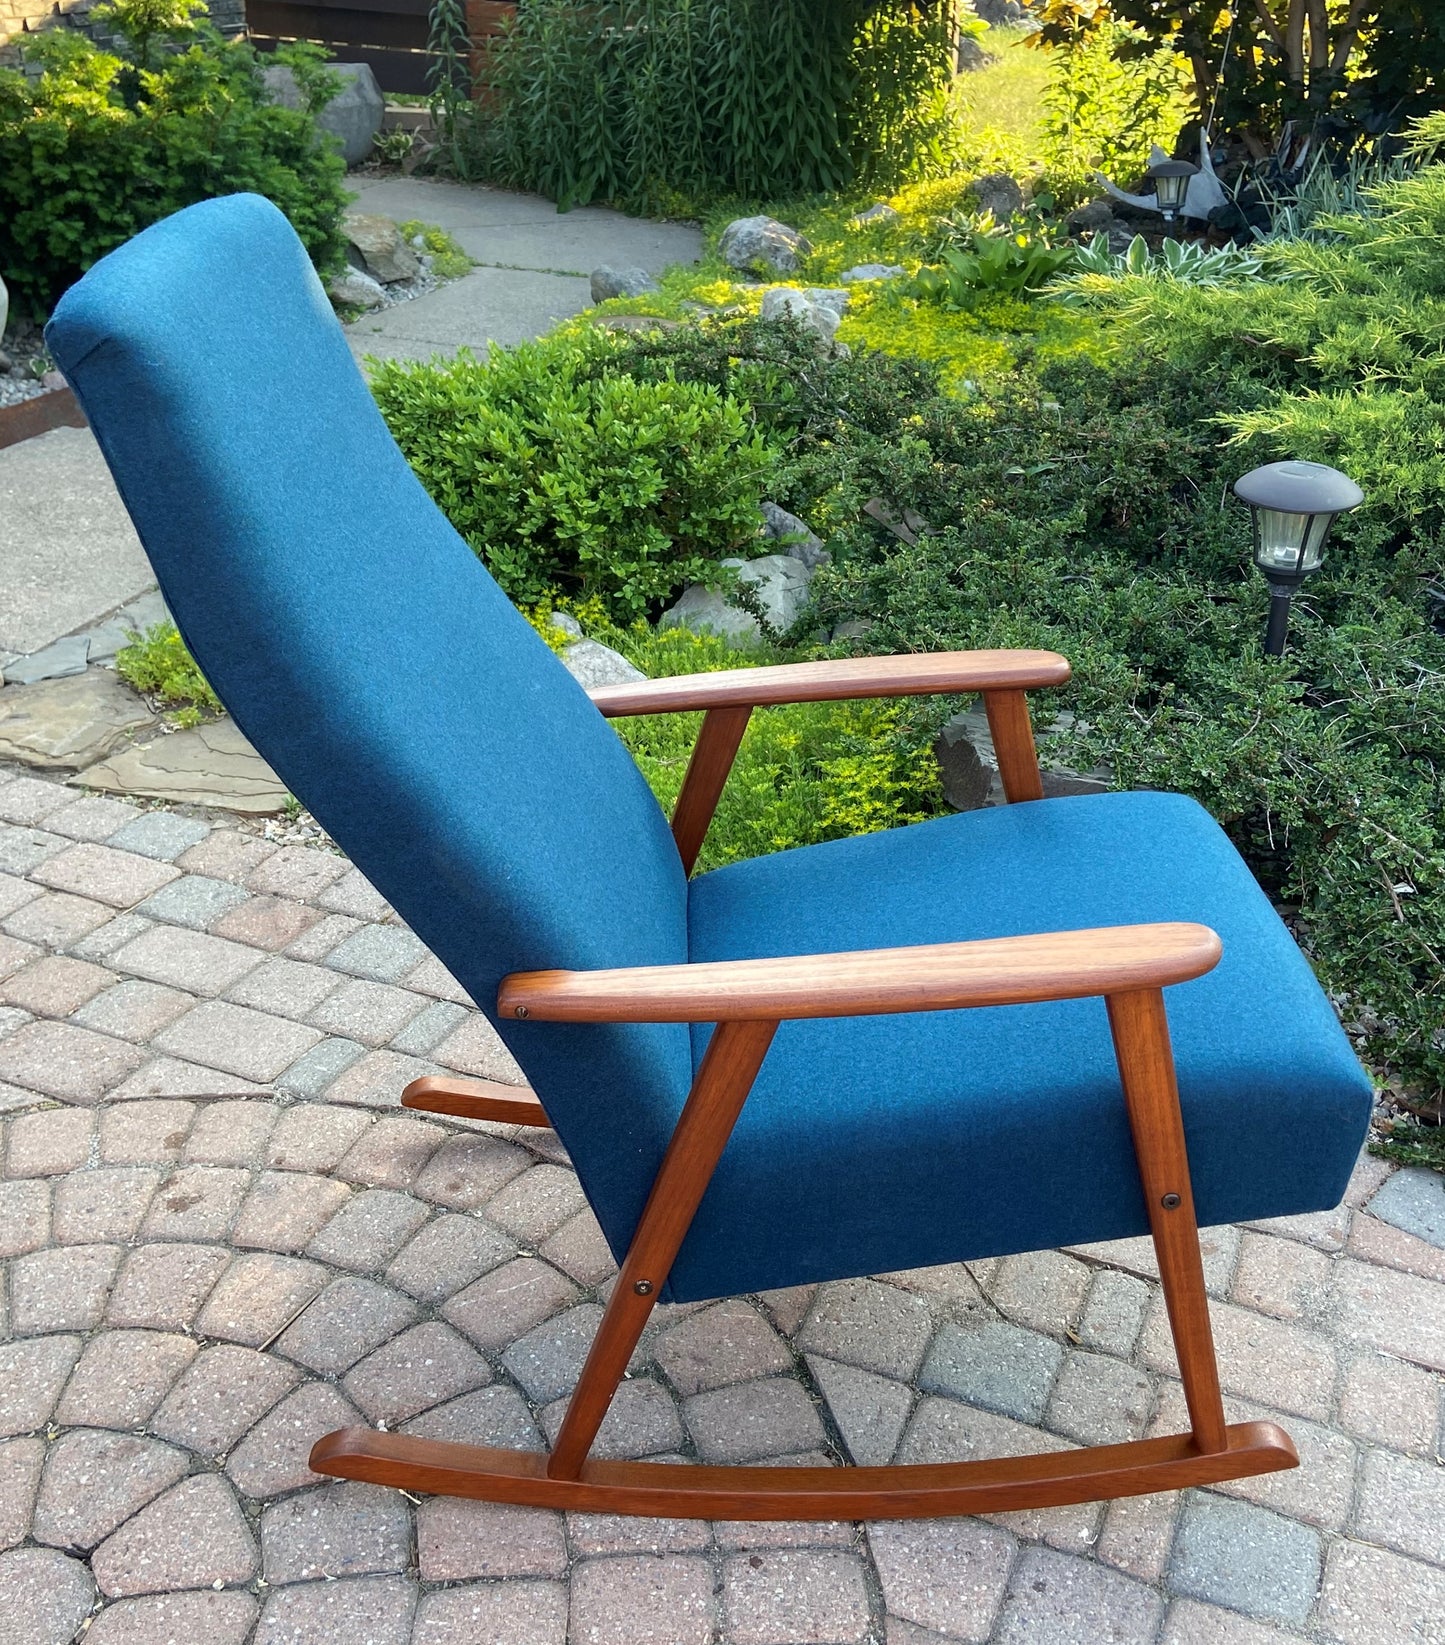 REFINISHED Danish Mid Century Modern Teak Rocking Chair NEW Wool Upholstery, Perfect